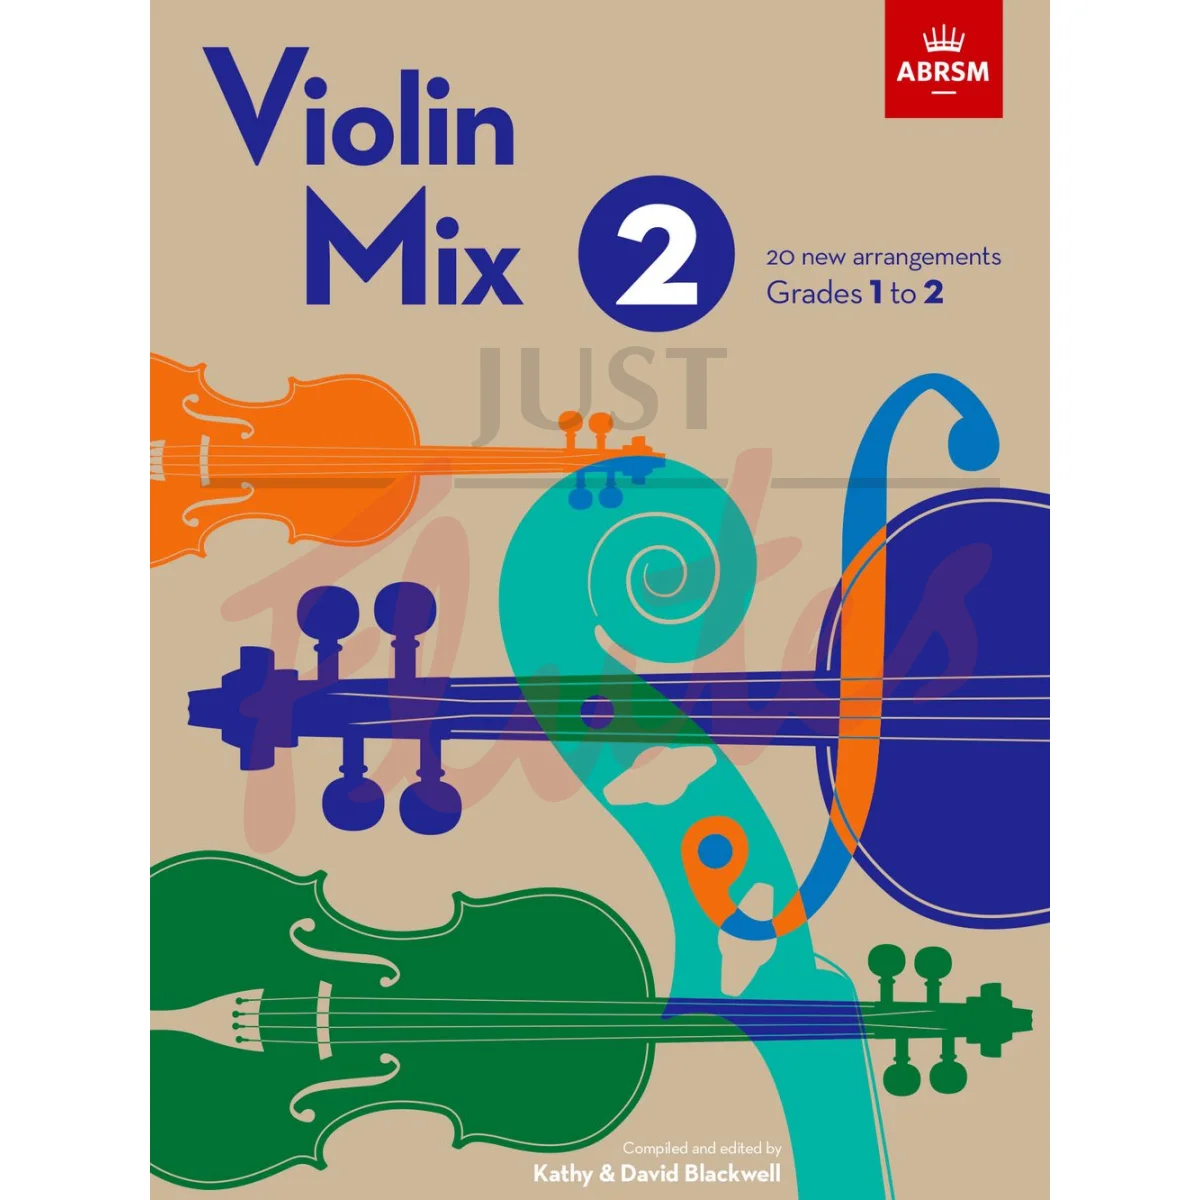 Violin Mix 2, Grades 1 to 2